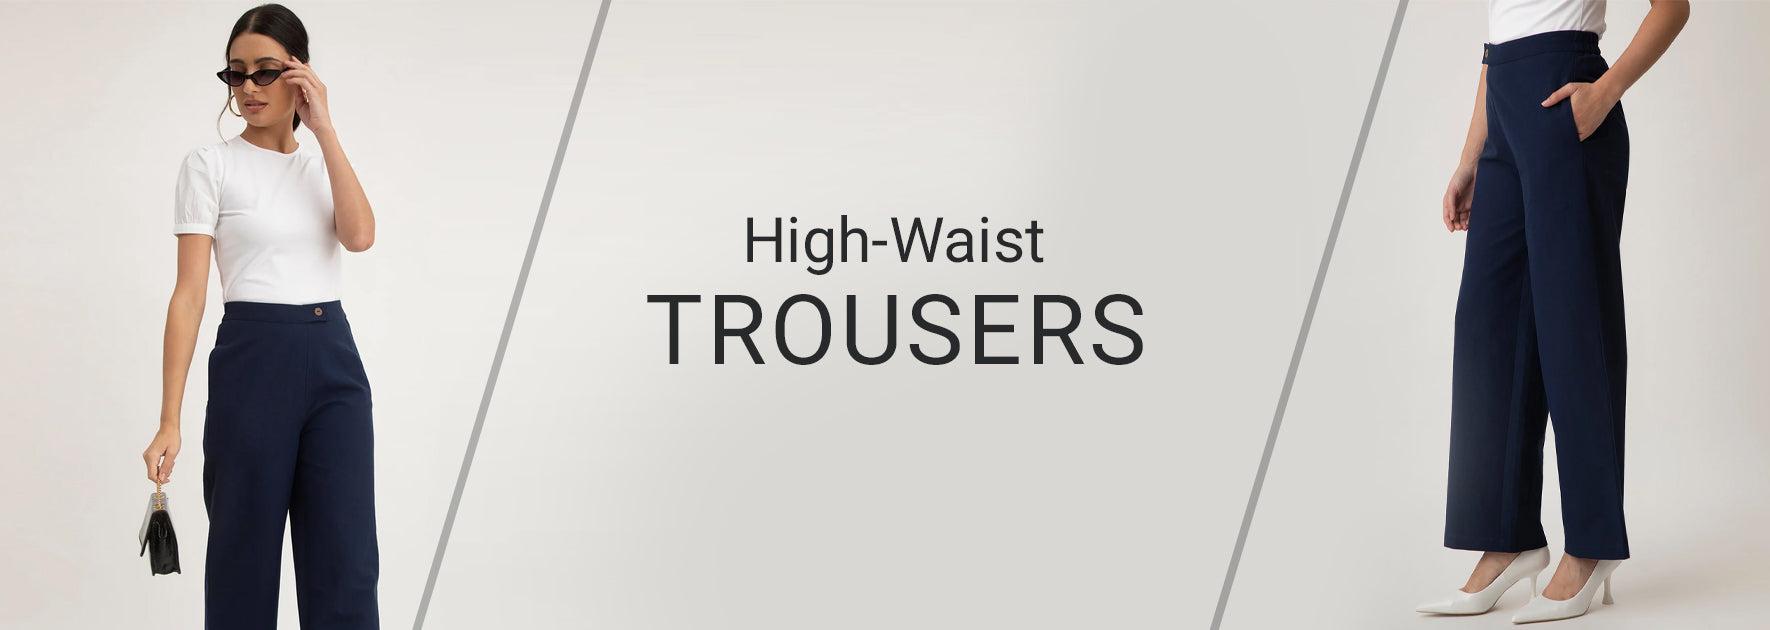 High-Waist Trousers